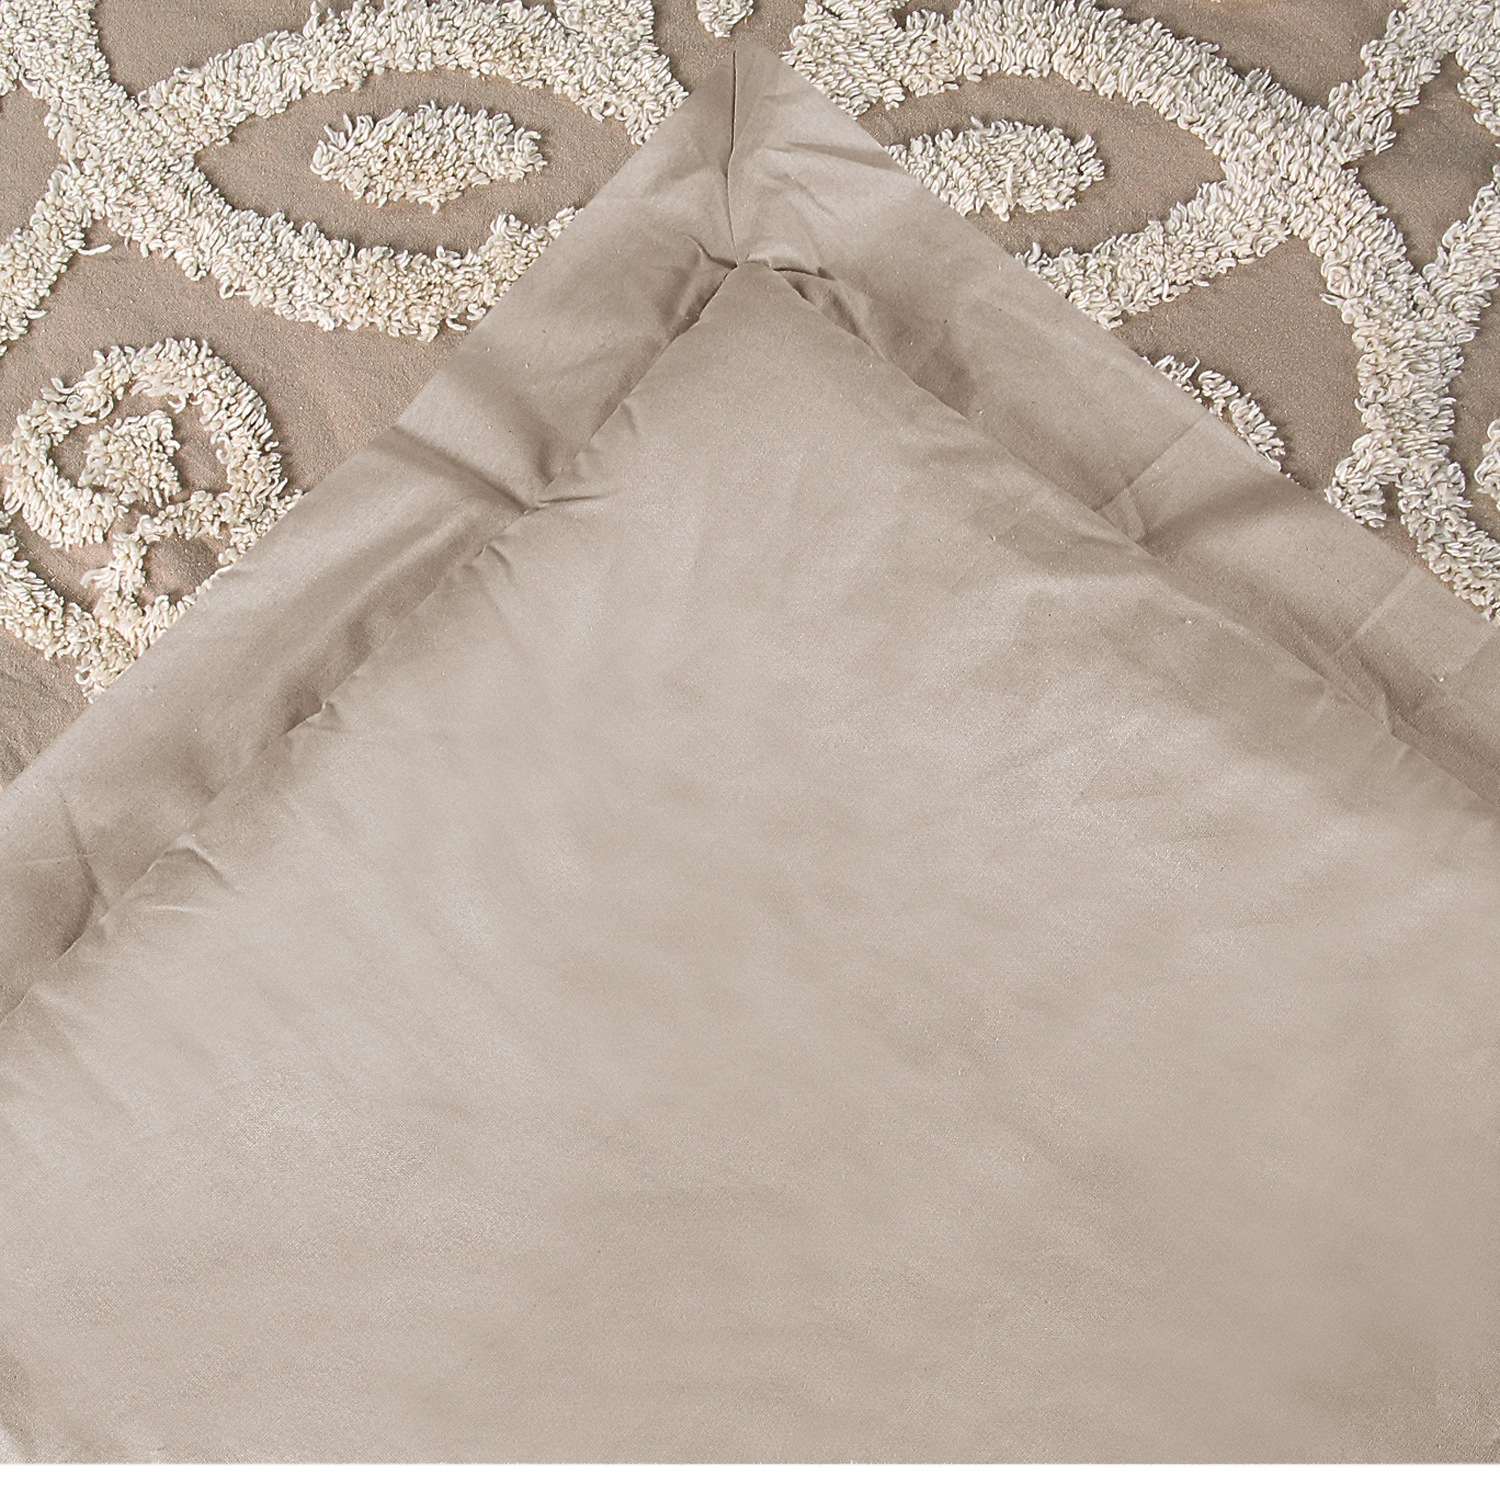 Better Trends Eden Comforter Floral 100% Cotton, Full/Queen, for Adult, Linen/Ivory - image 4 of 4